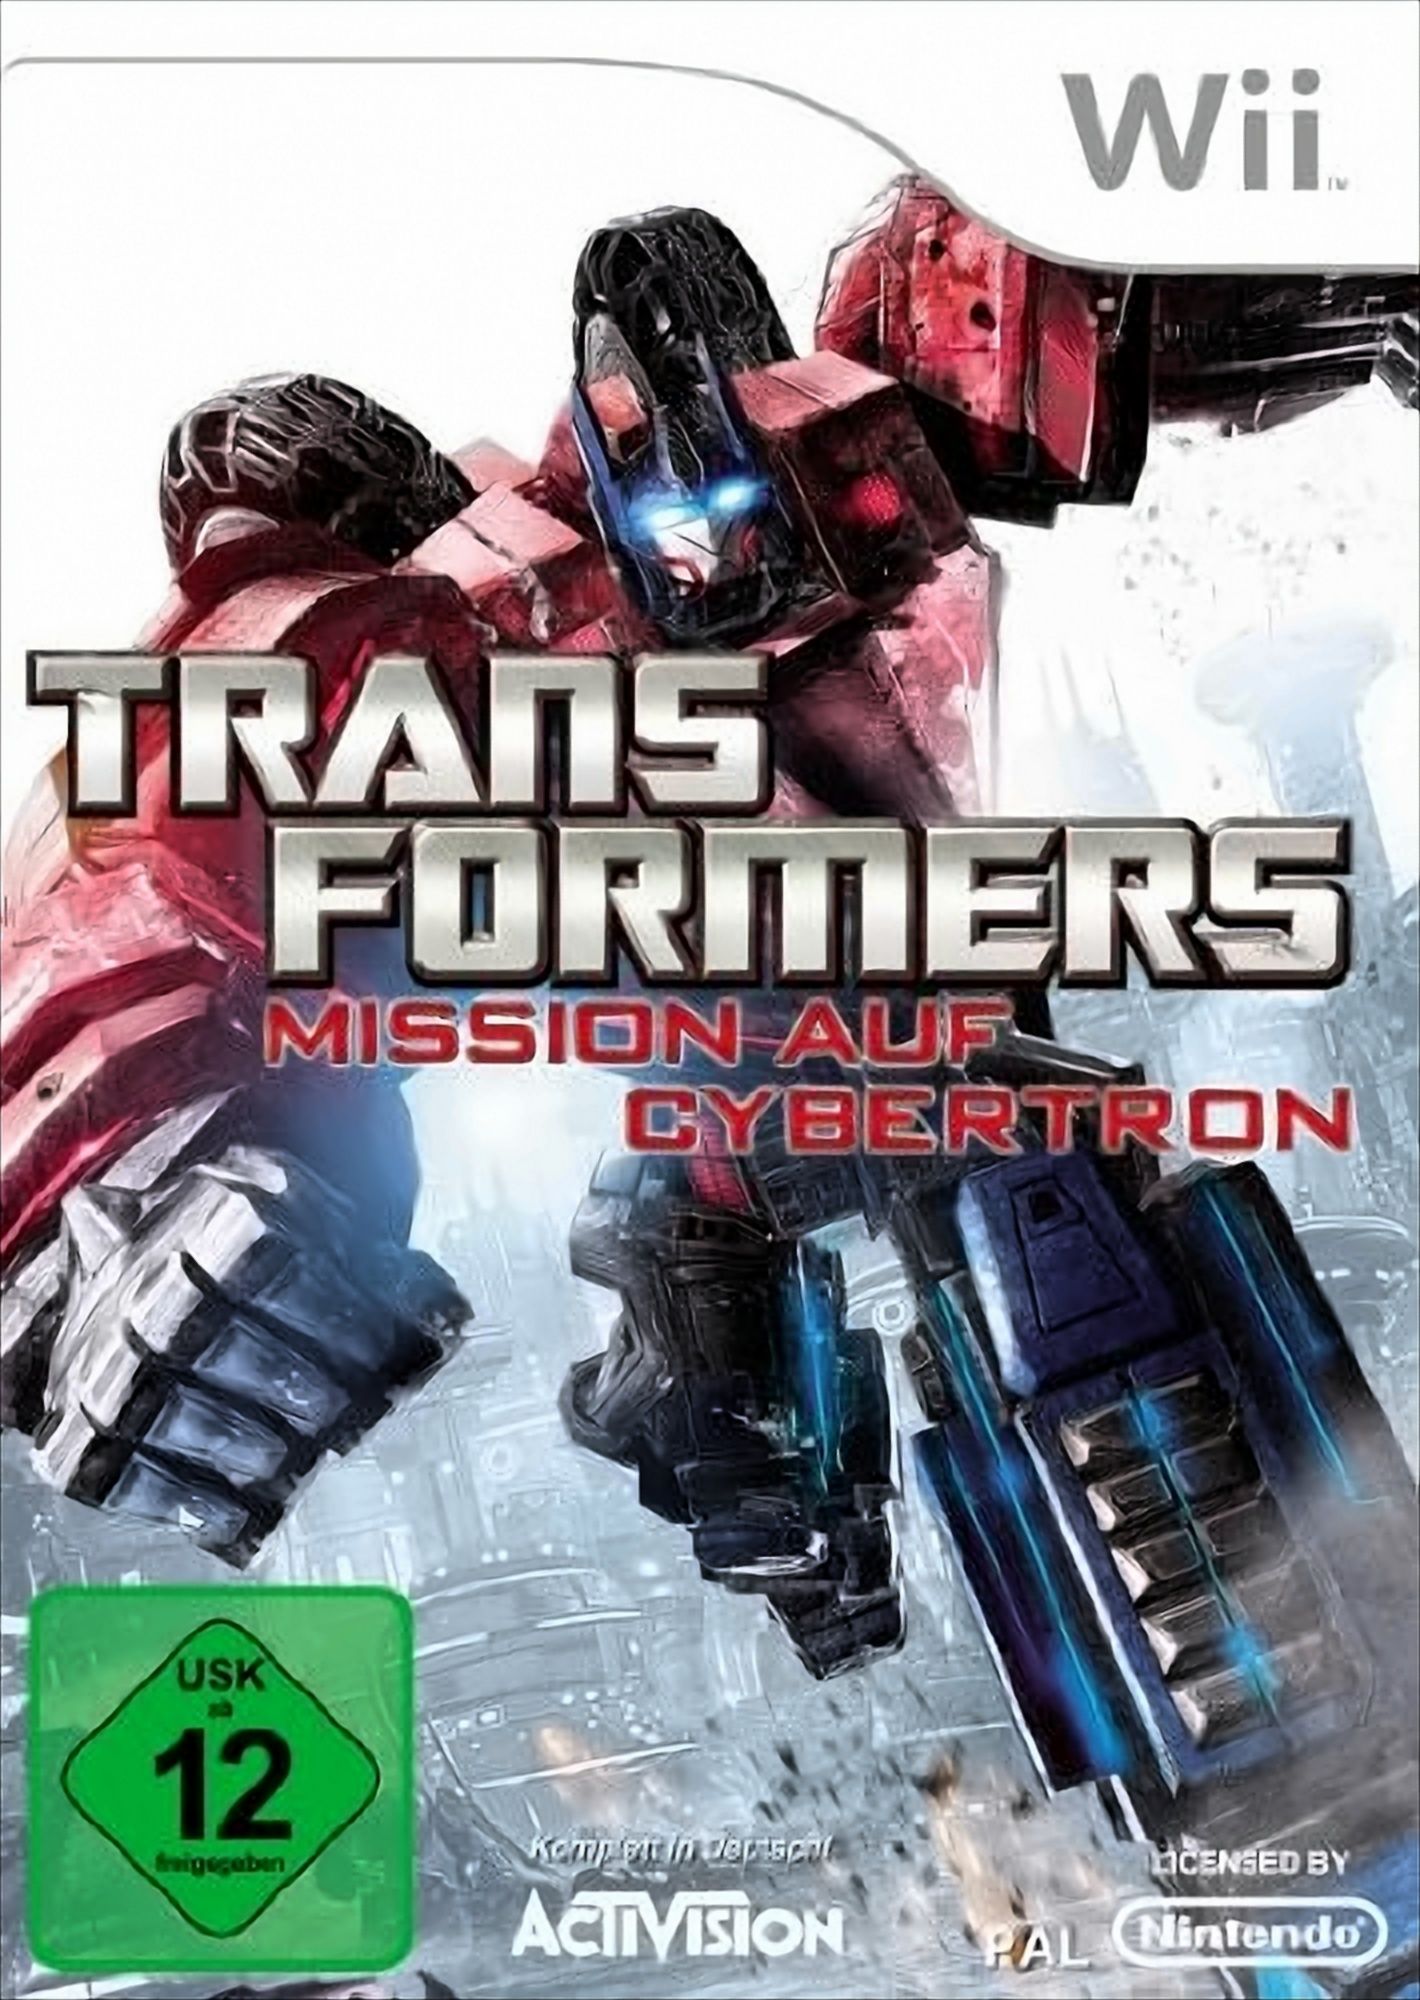 Transformers: Mission auf Wii] - [Nintendo Cybertron